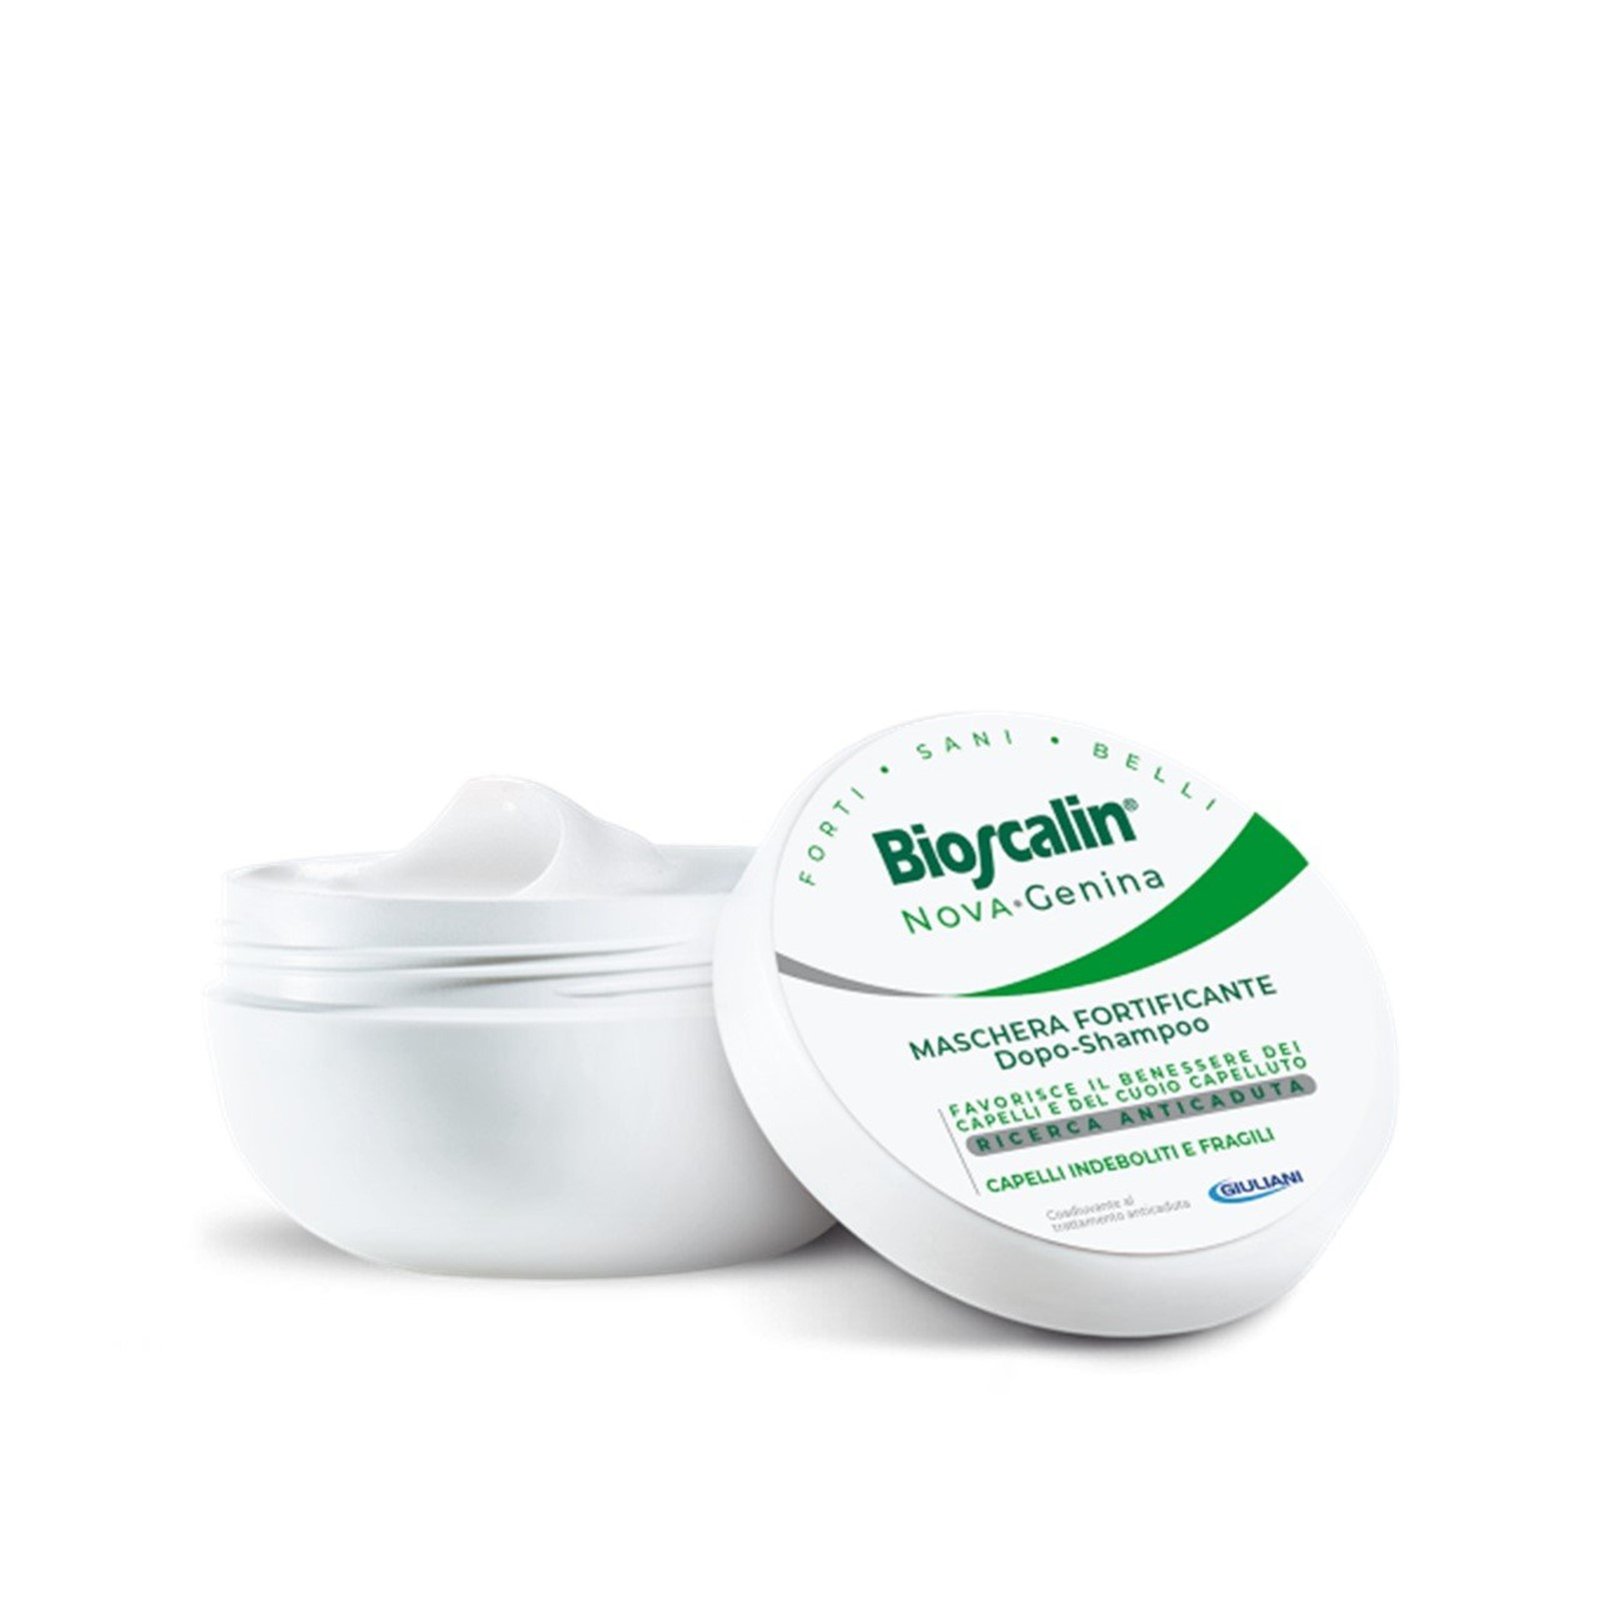 Bioscalin Nova Genina Post Shampoo Fortifying Mask 200ml (6.76 fl oz)